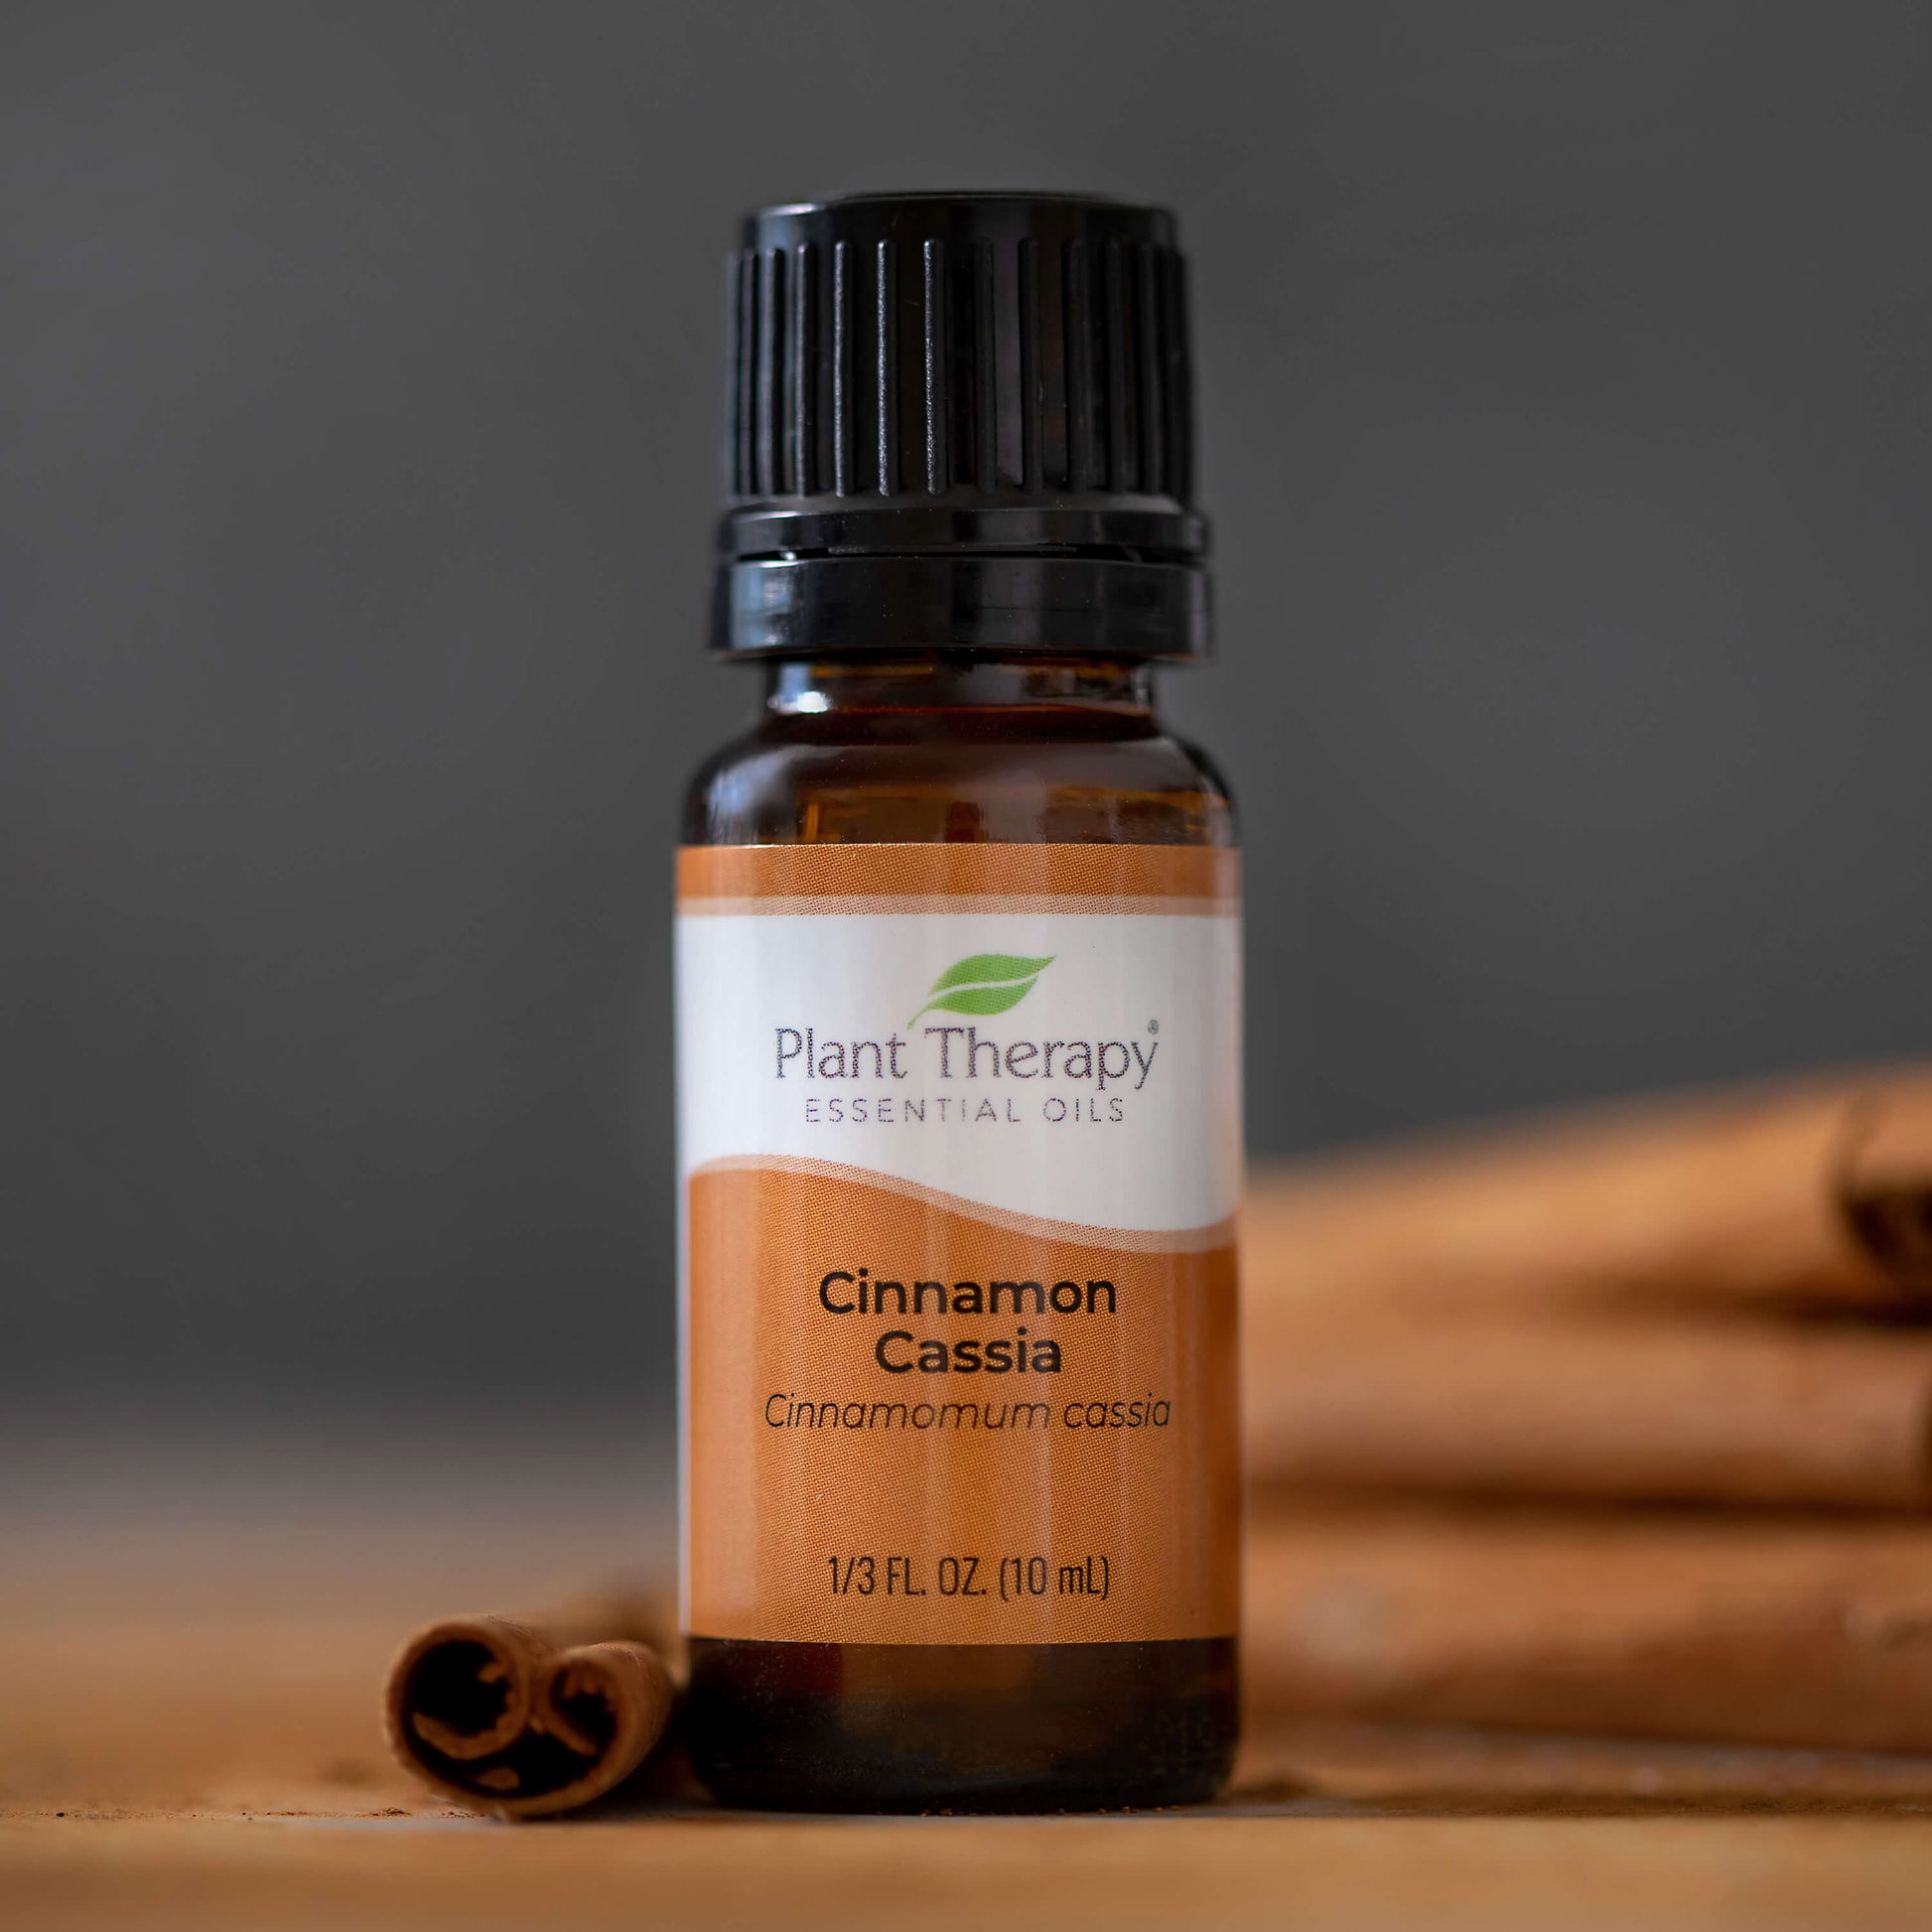 Cinnamon Essential Oil